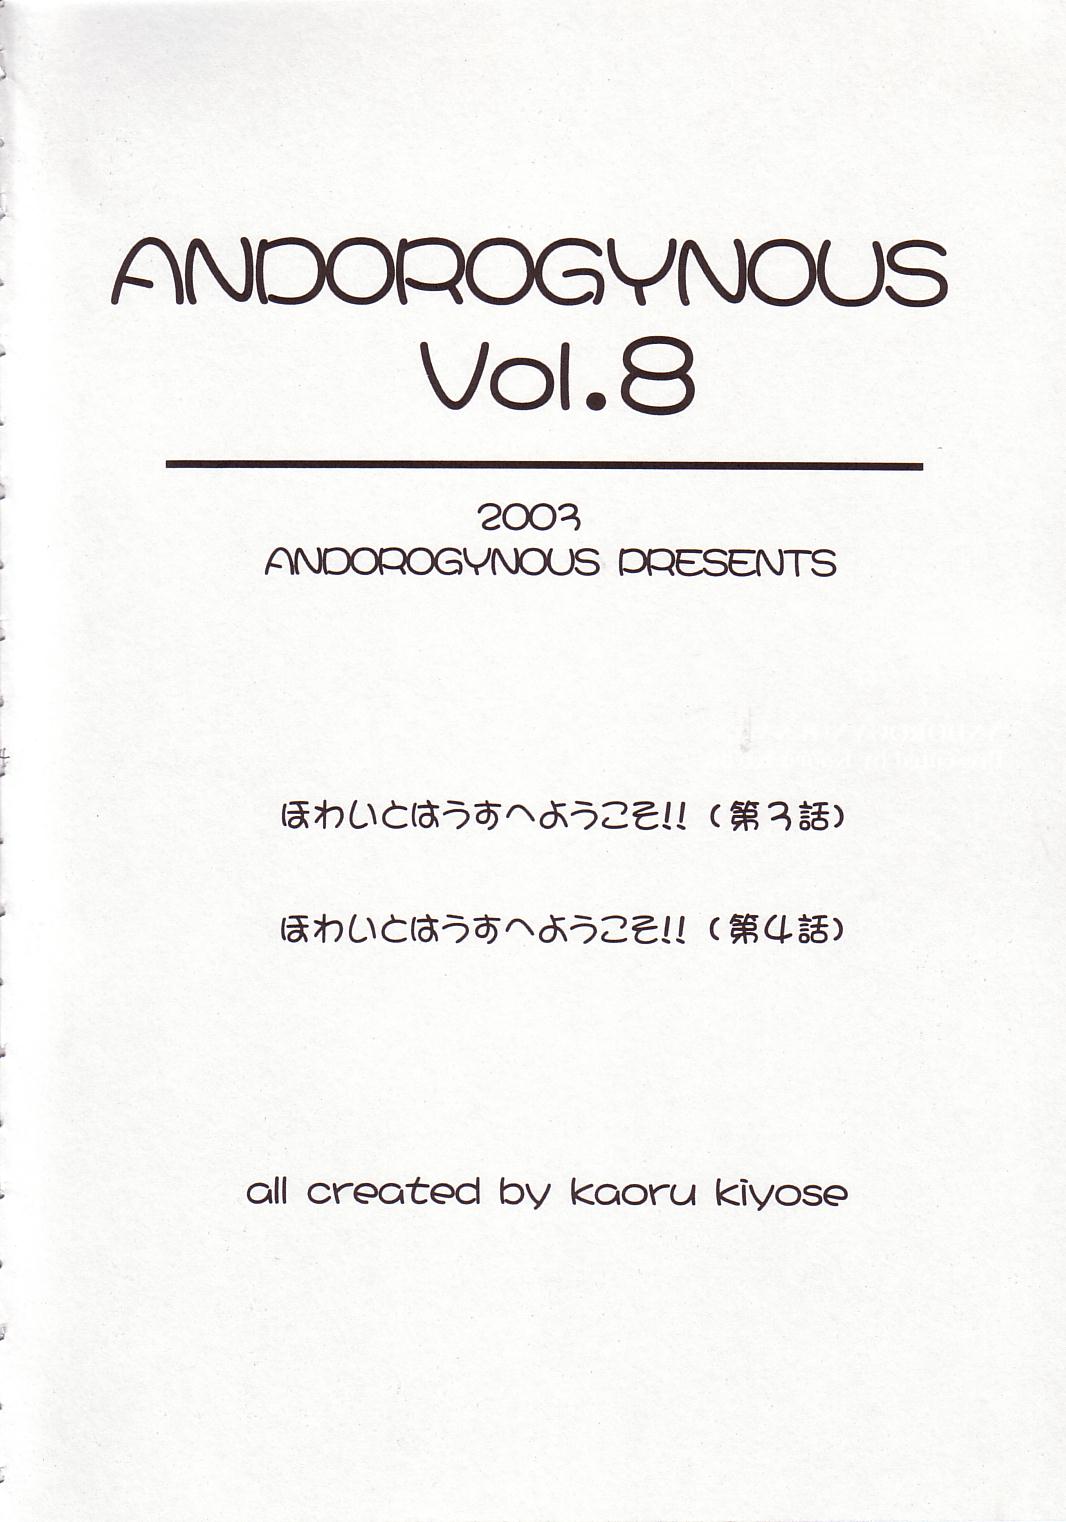 Andorogynous Vol. 8 [Futanari] 